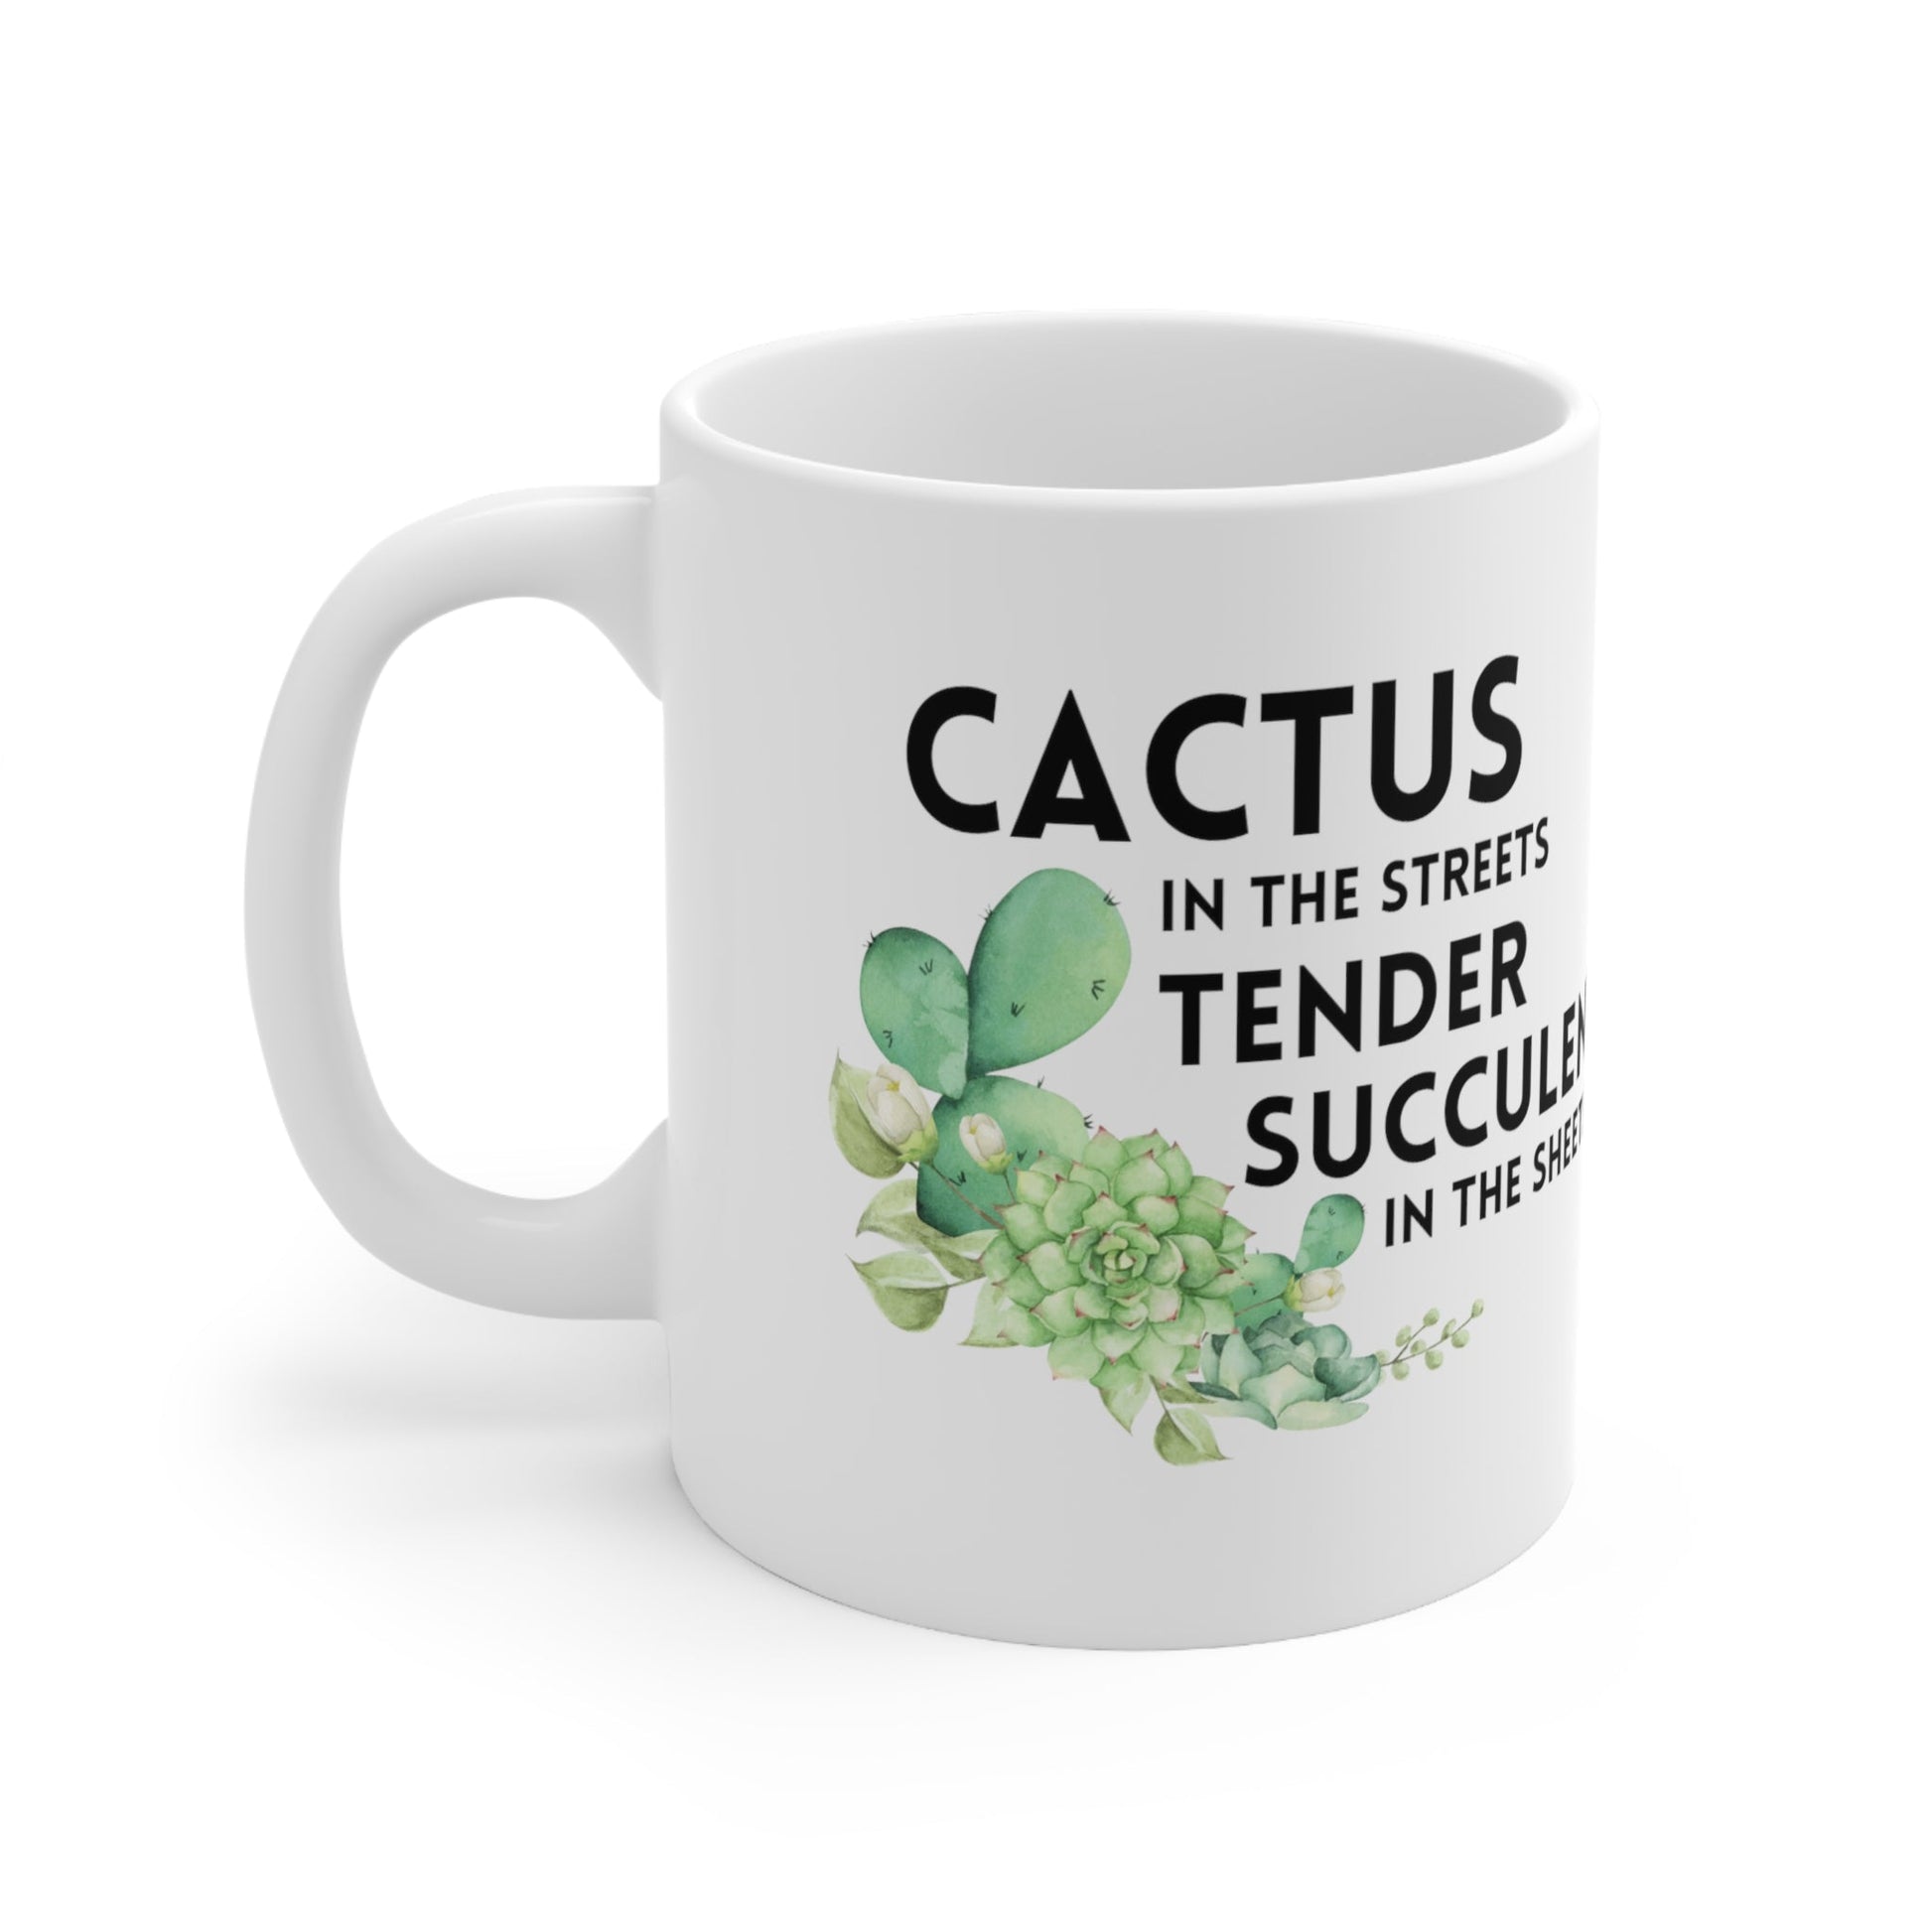 Cactus in the Streets Tender Succulent in the Street Design Ceramic Mug 11oz